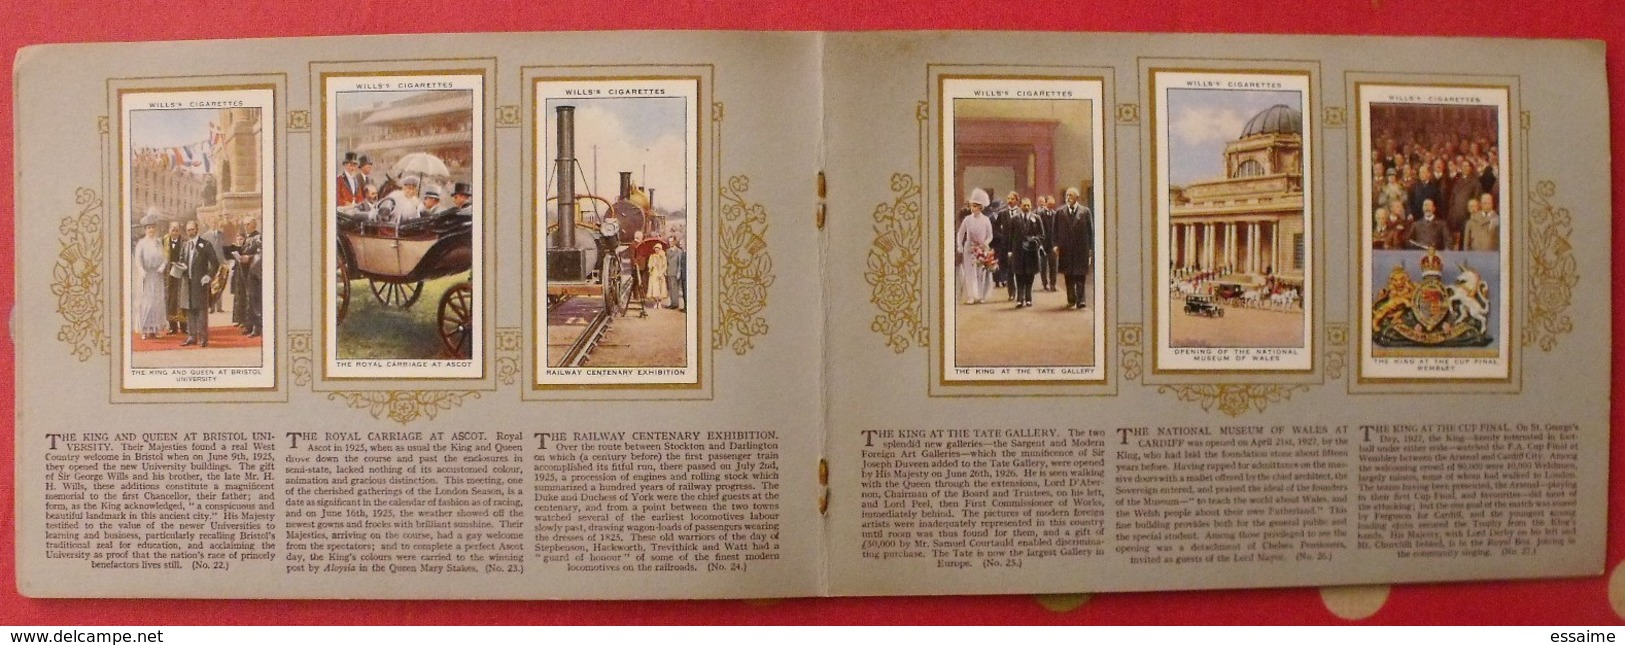 album d'images cigarette pictures wills's. en anglais. reign king George V. règne roi. 1935. 50 chromo